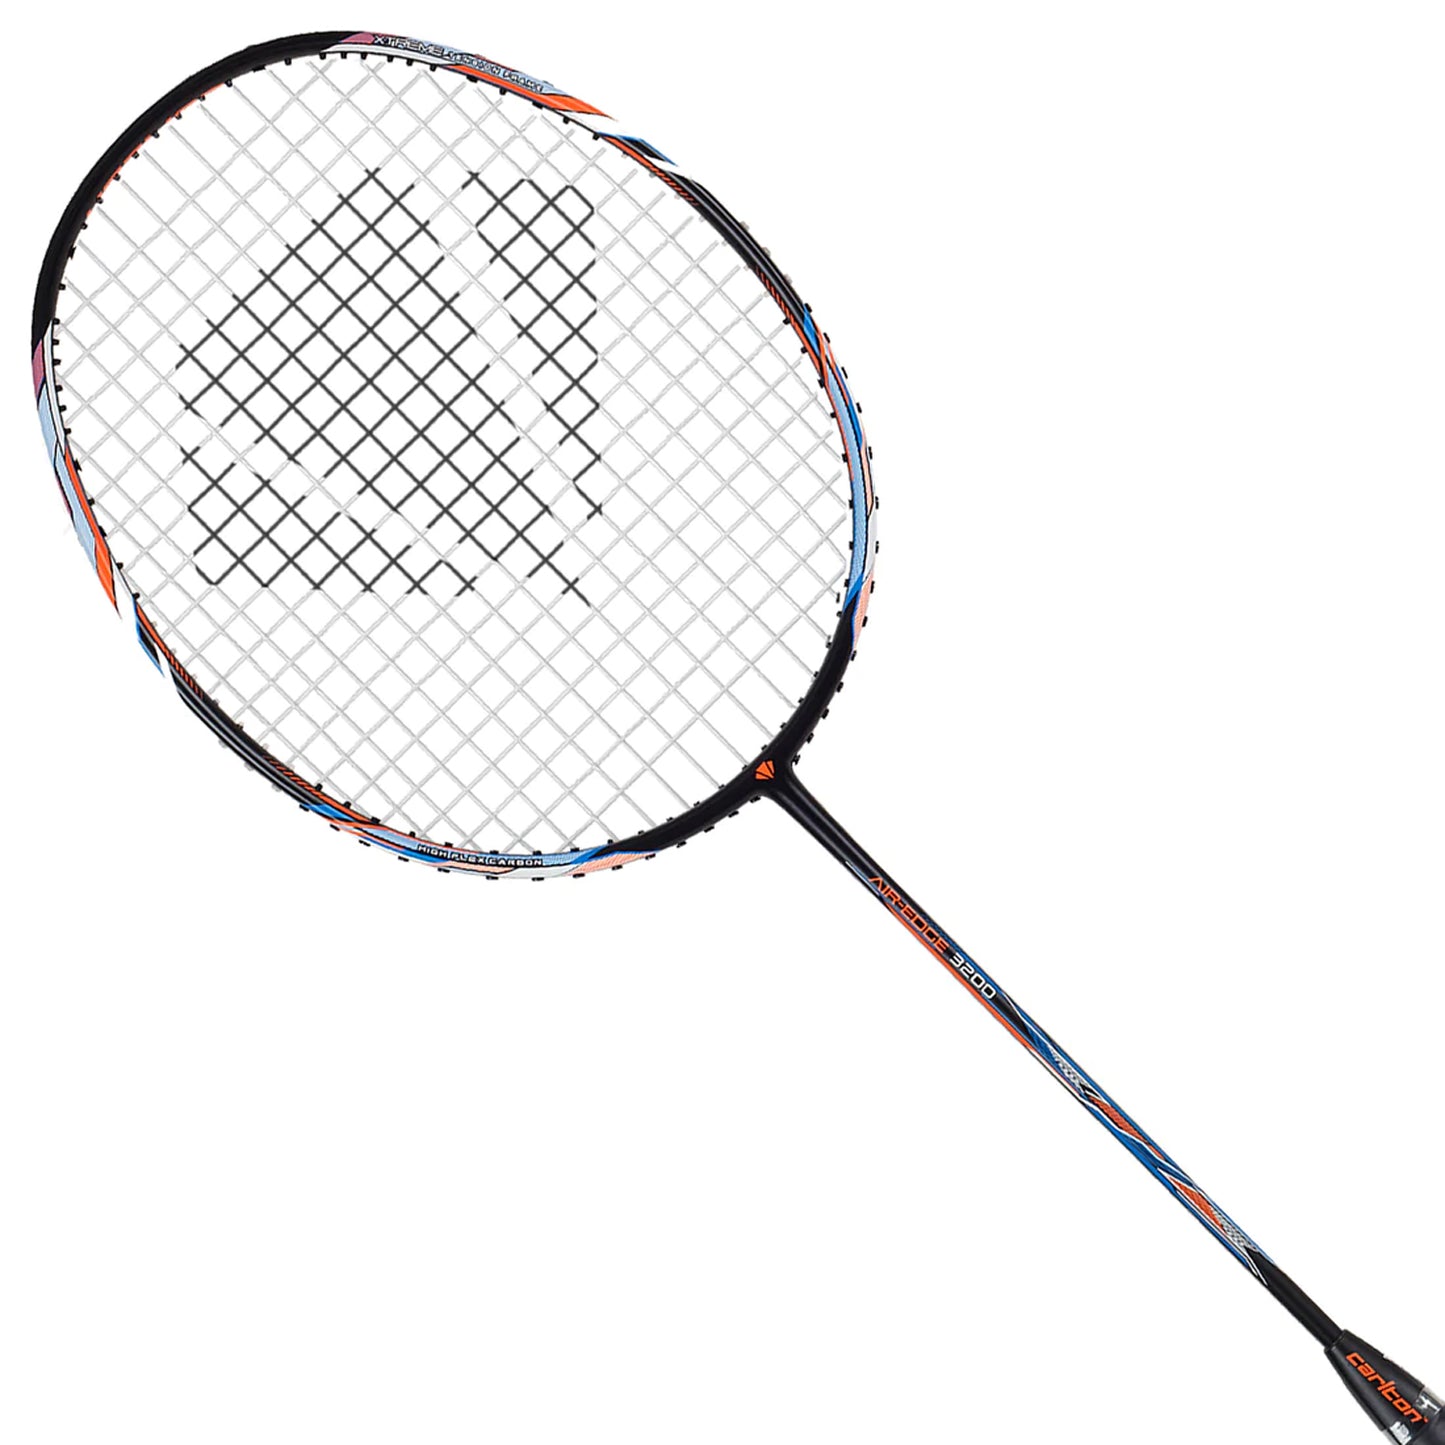 Carlton AIR Edge 3200 Strung Badminton Racquet, G6- Black/Orange - Best Price online Prokicksports.com